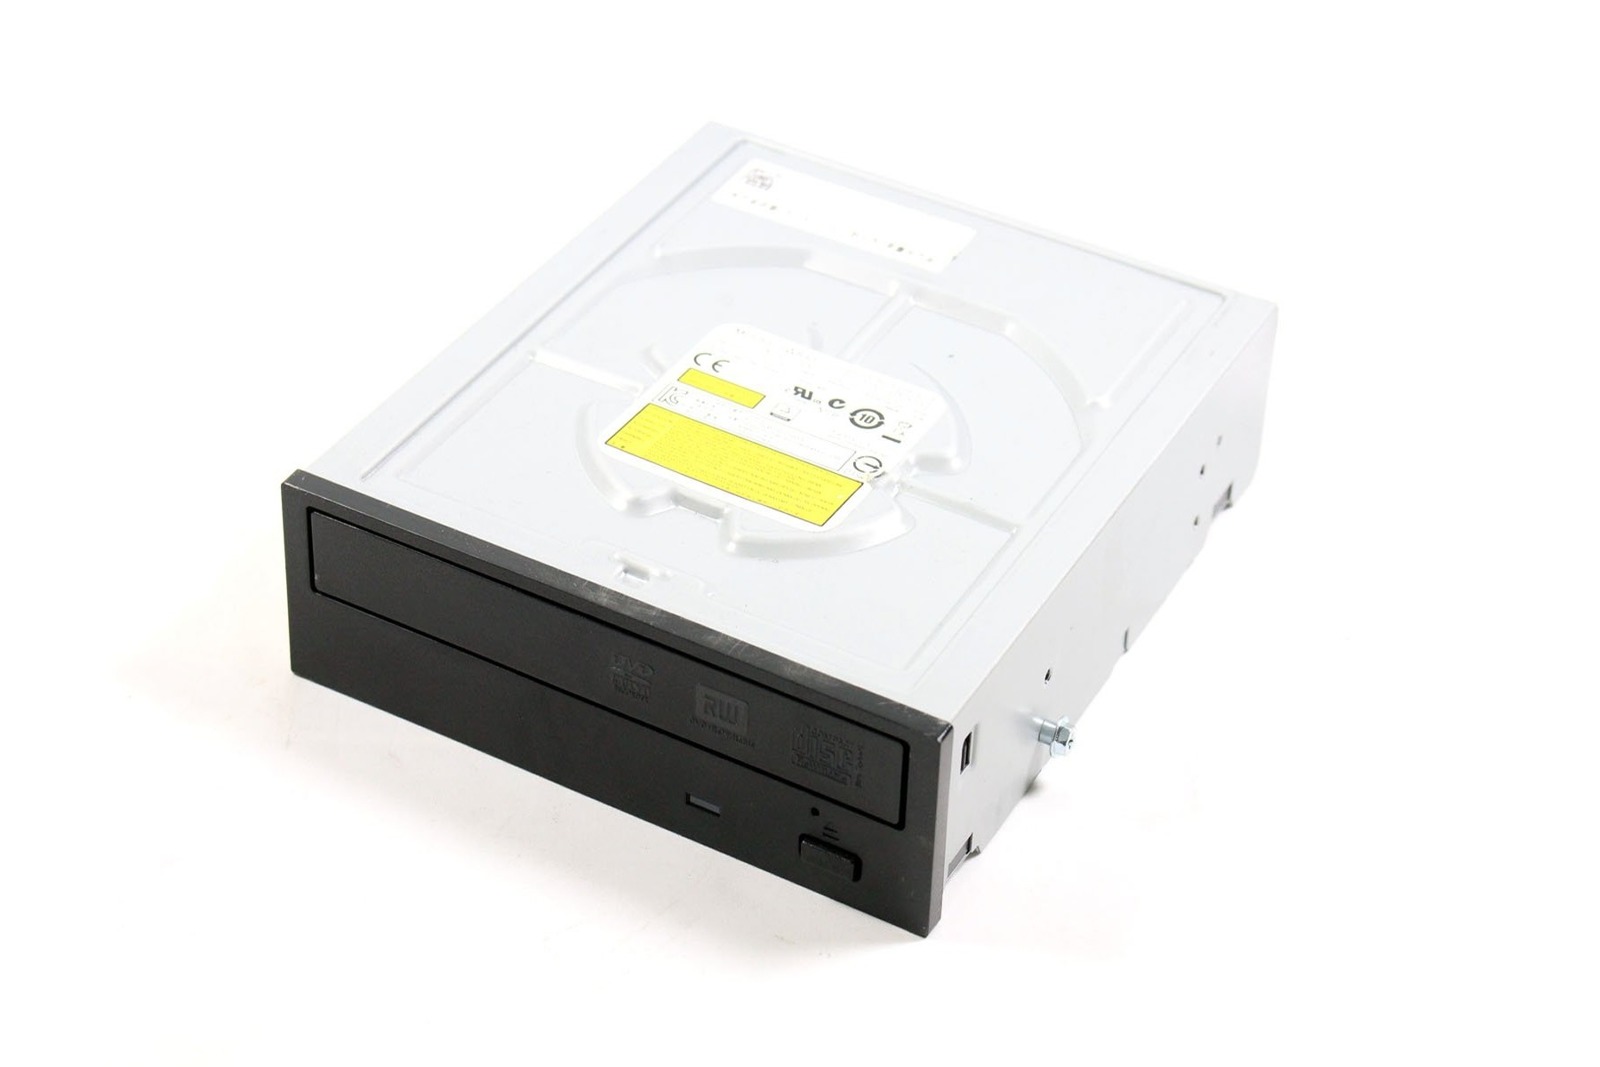 Panasonic SATA DVD Burner + RW DL internal 5.25" SW830 OEM